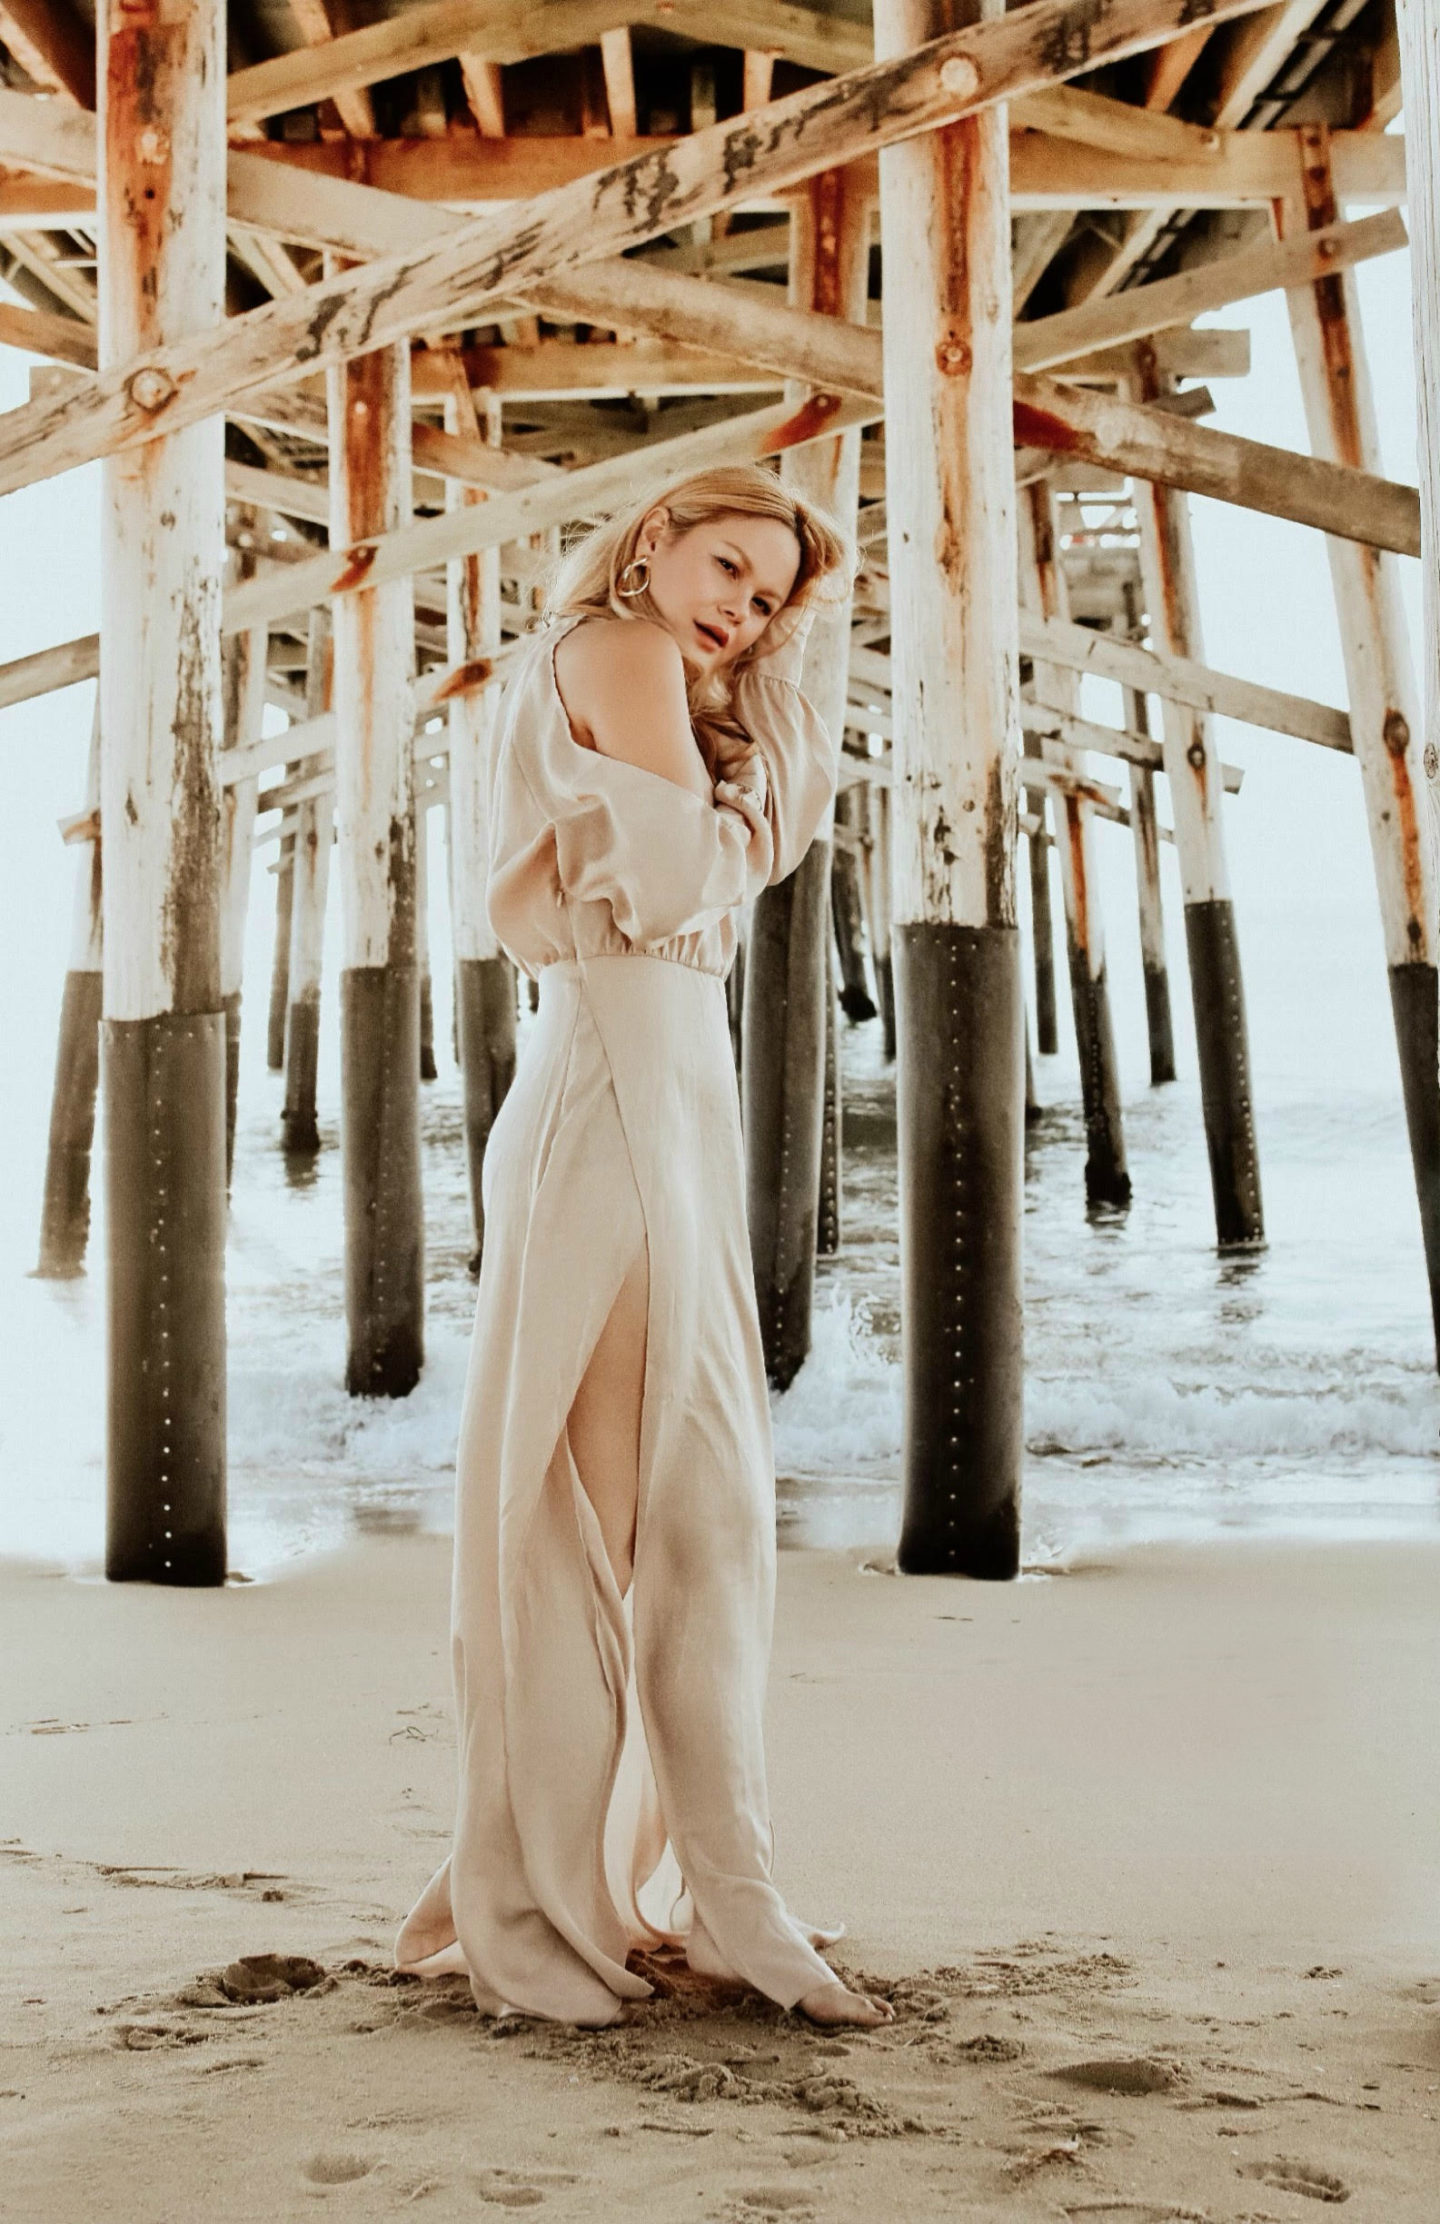 Balboa-Beach-Model-Vanessa-Lambert-Happy-Place-WhatWouldVWear